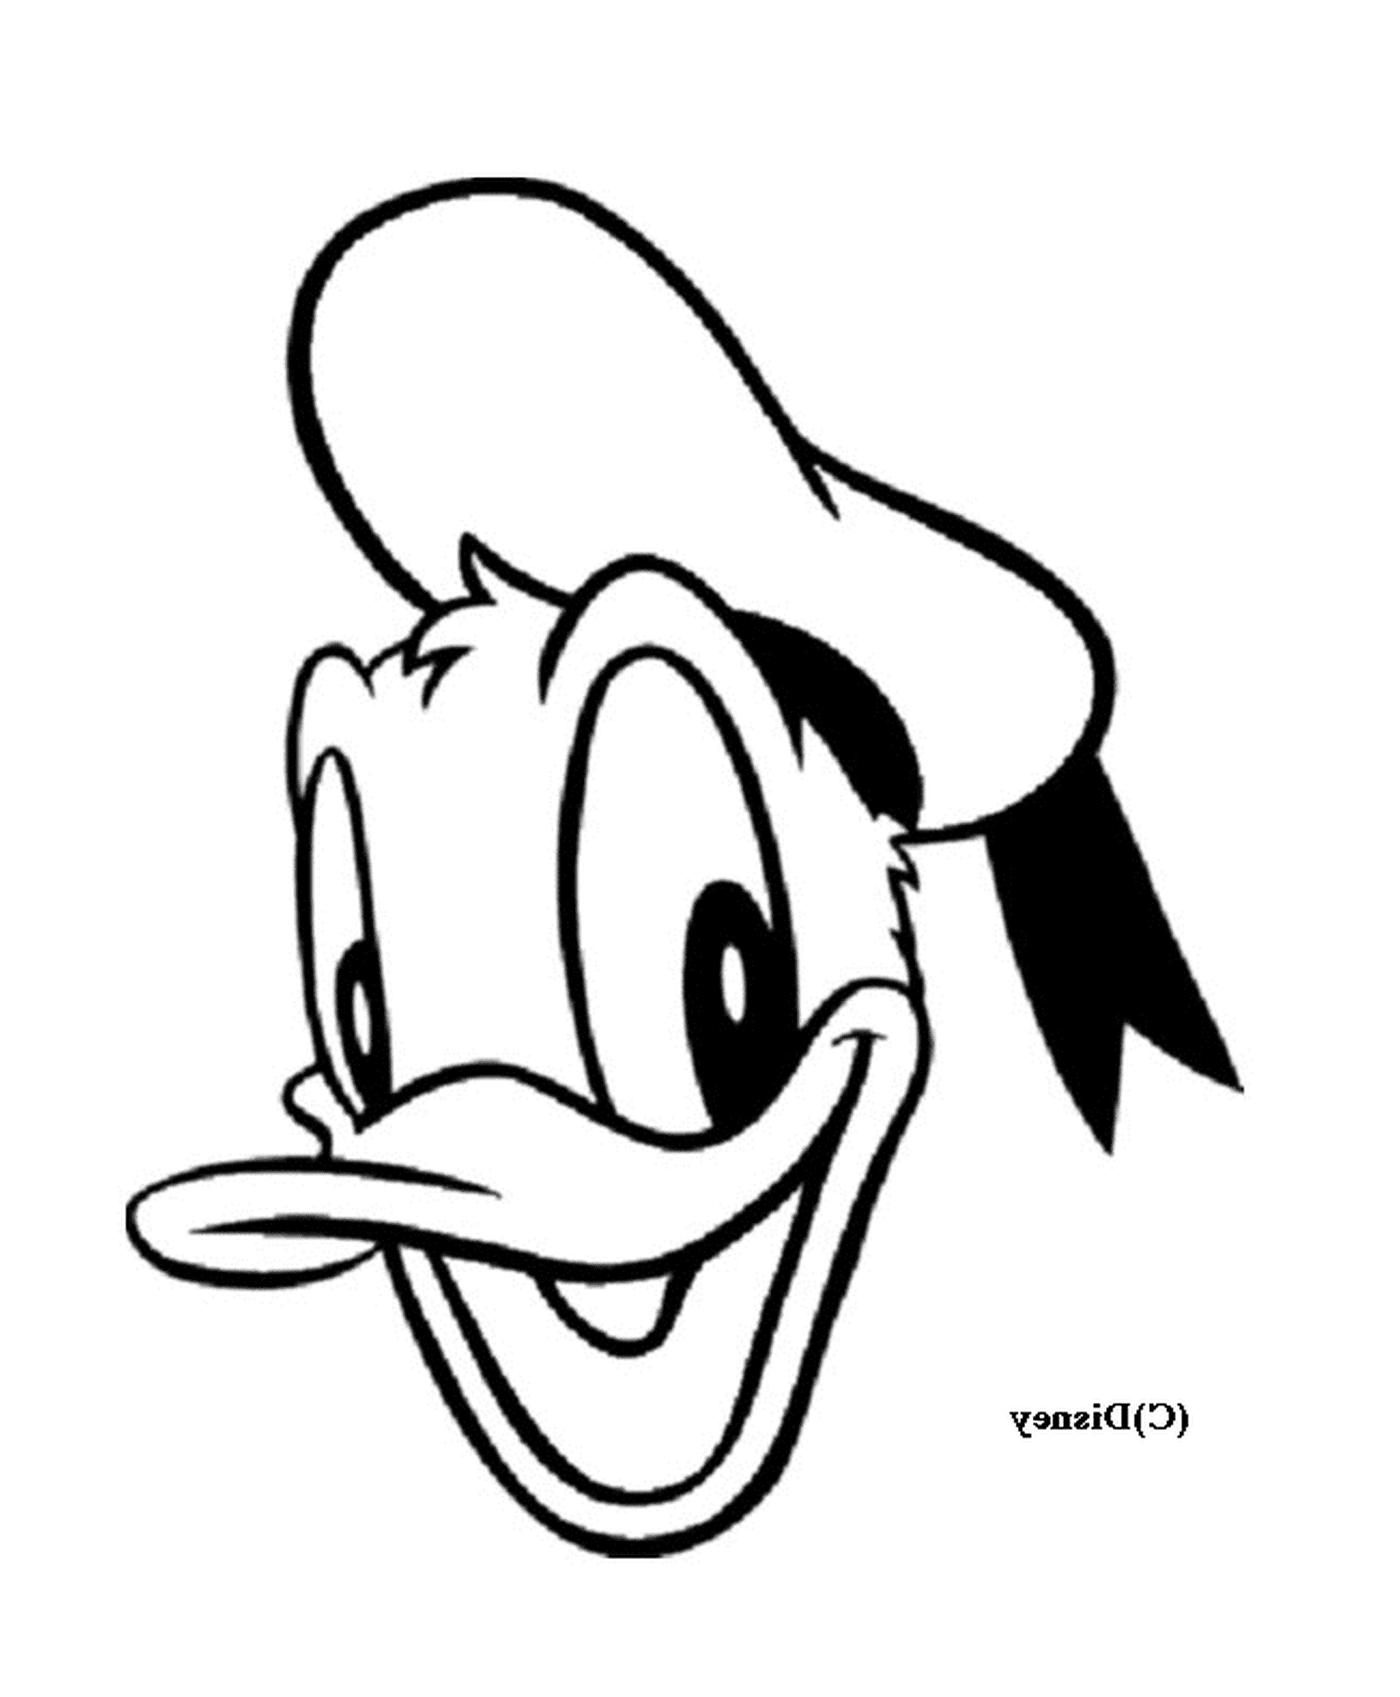  Donald's recognizable head 